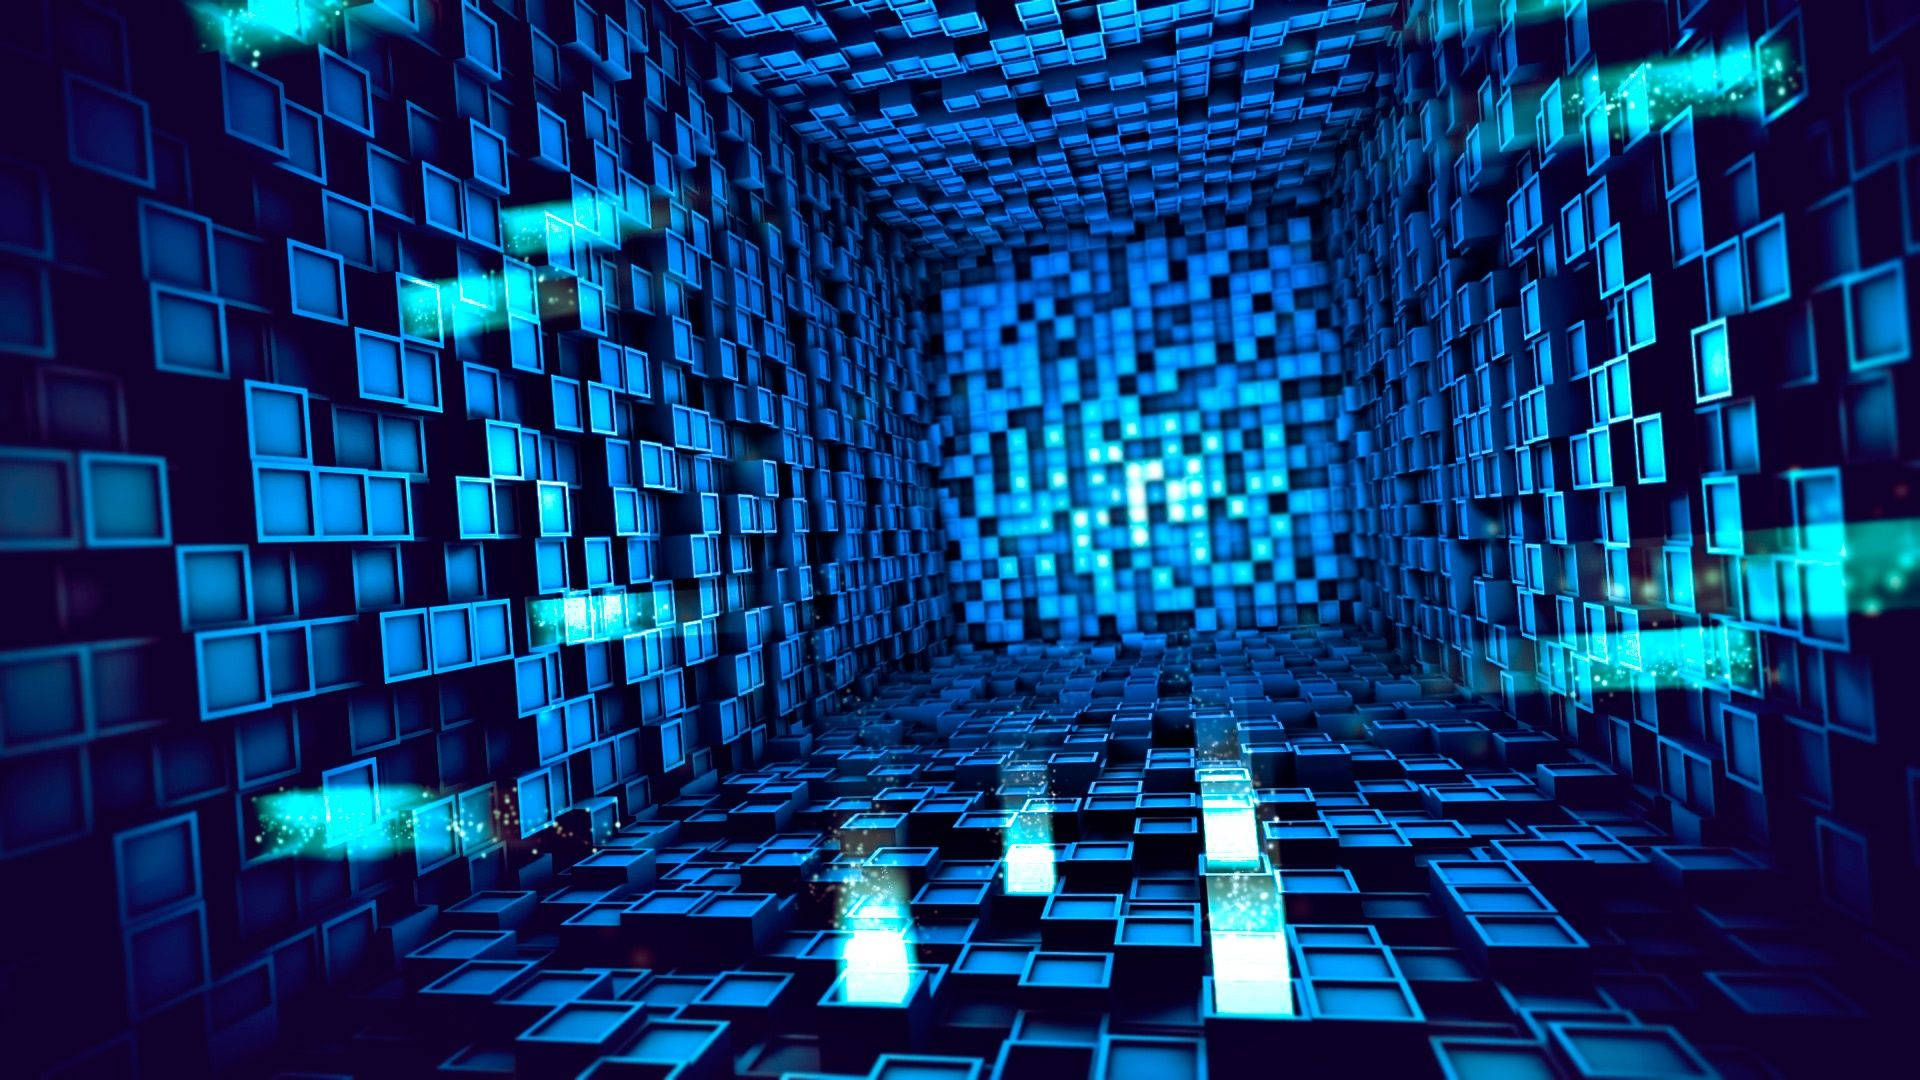 Technology Blue Cube Pattern wallpaper